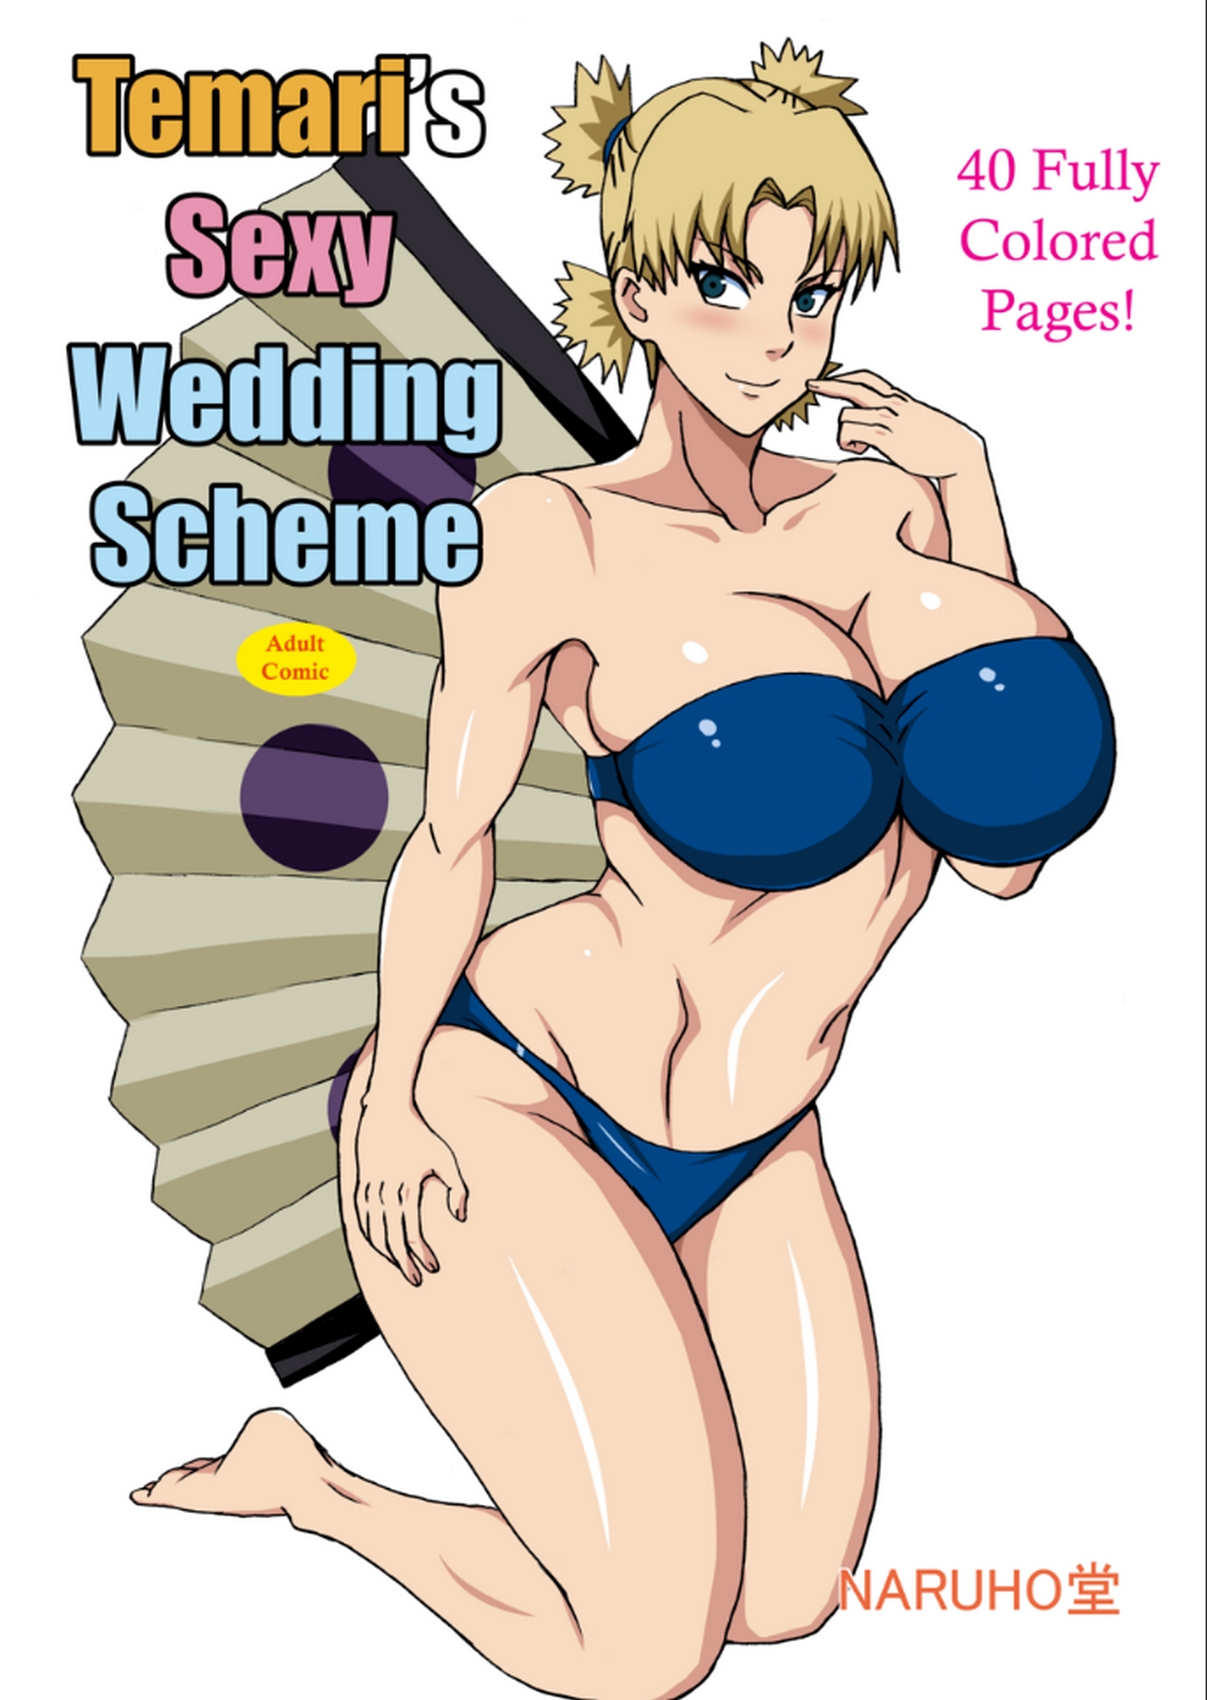 Naruhodo - Temari's Sexy Wedding Scheme â€¢ Free Porn Comics